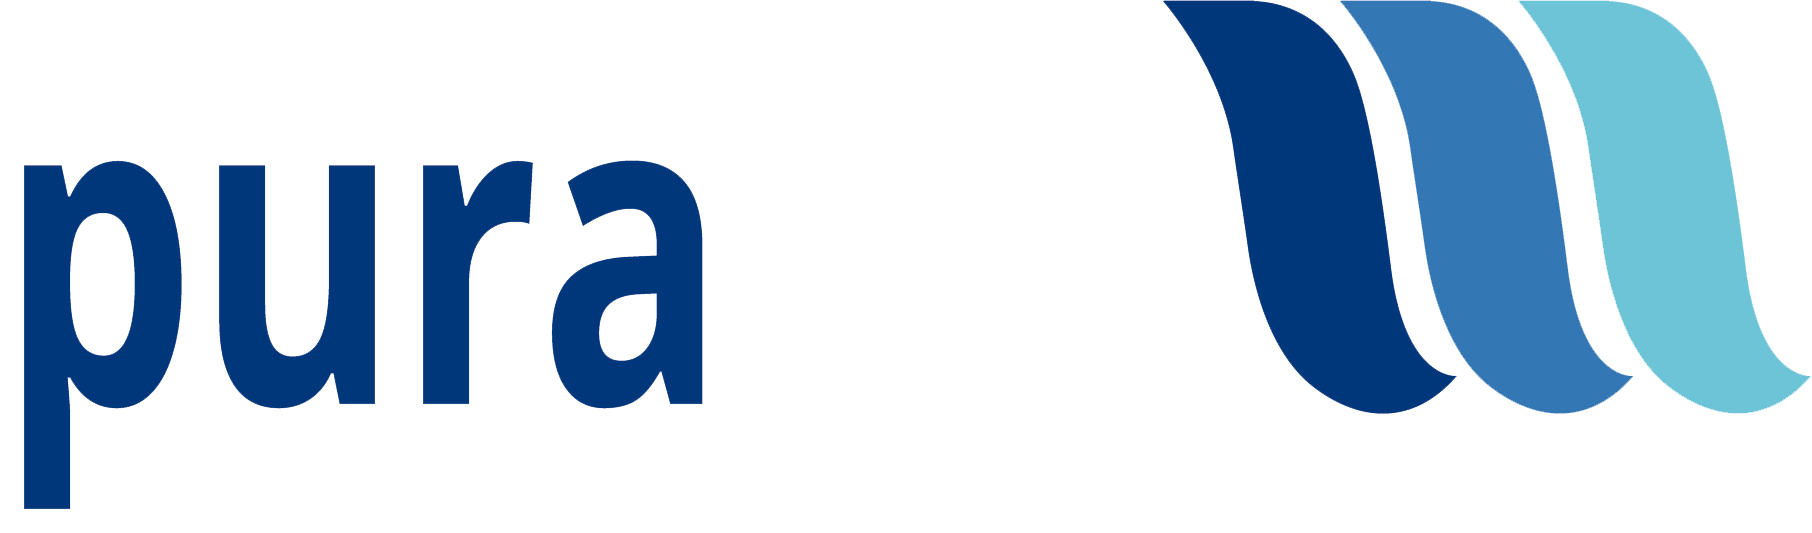 PURA-Logo-(1)